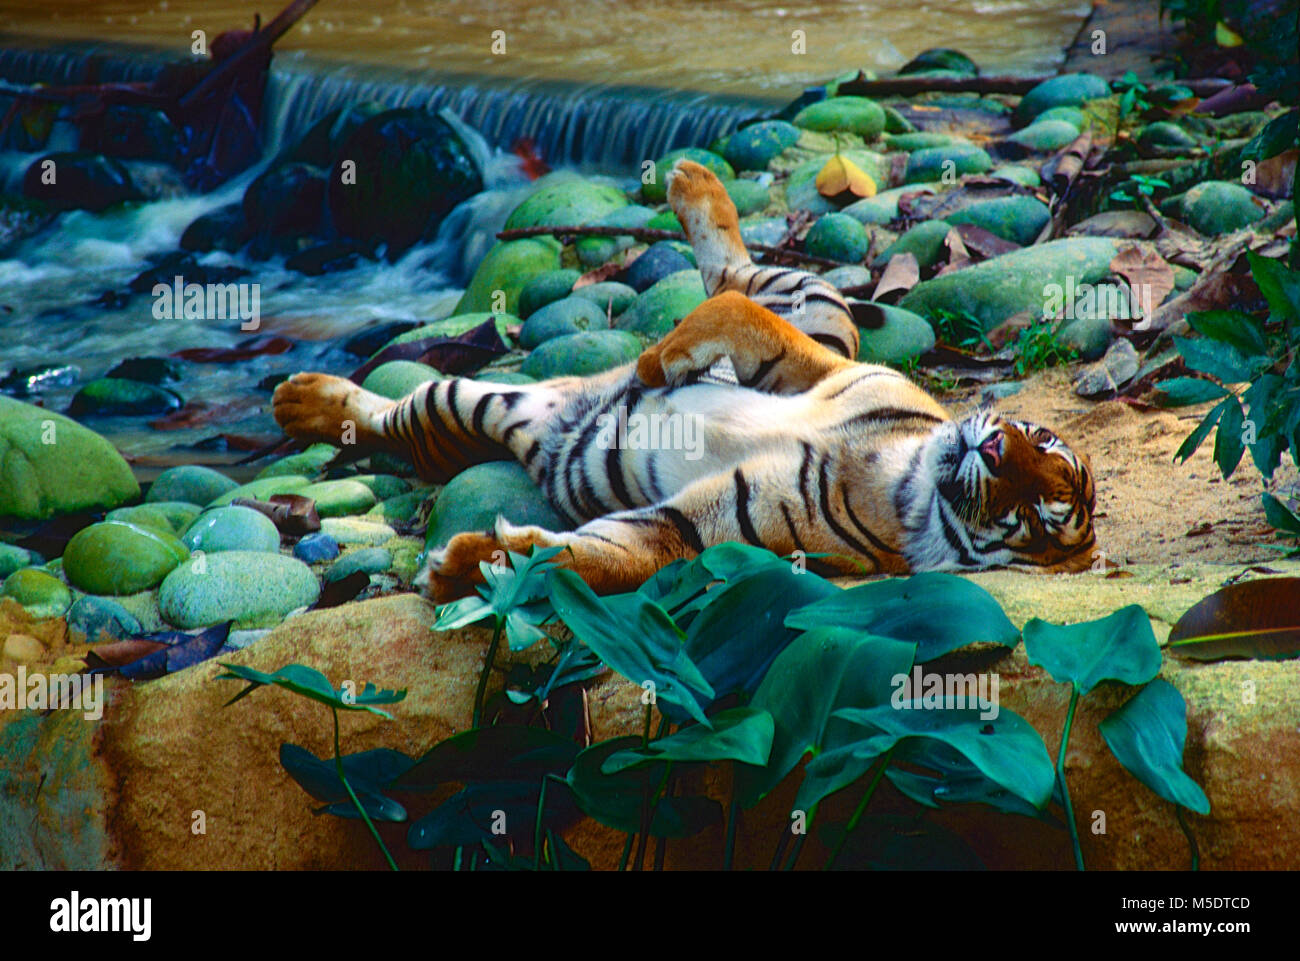 La tigre di Sumatra, Panthera tigris sondaica, Felidae, tigre, predator, dormendo, animale mammifero, captive, Zoo, Singapore Foto Stock